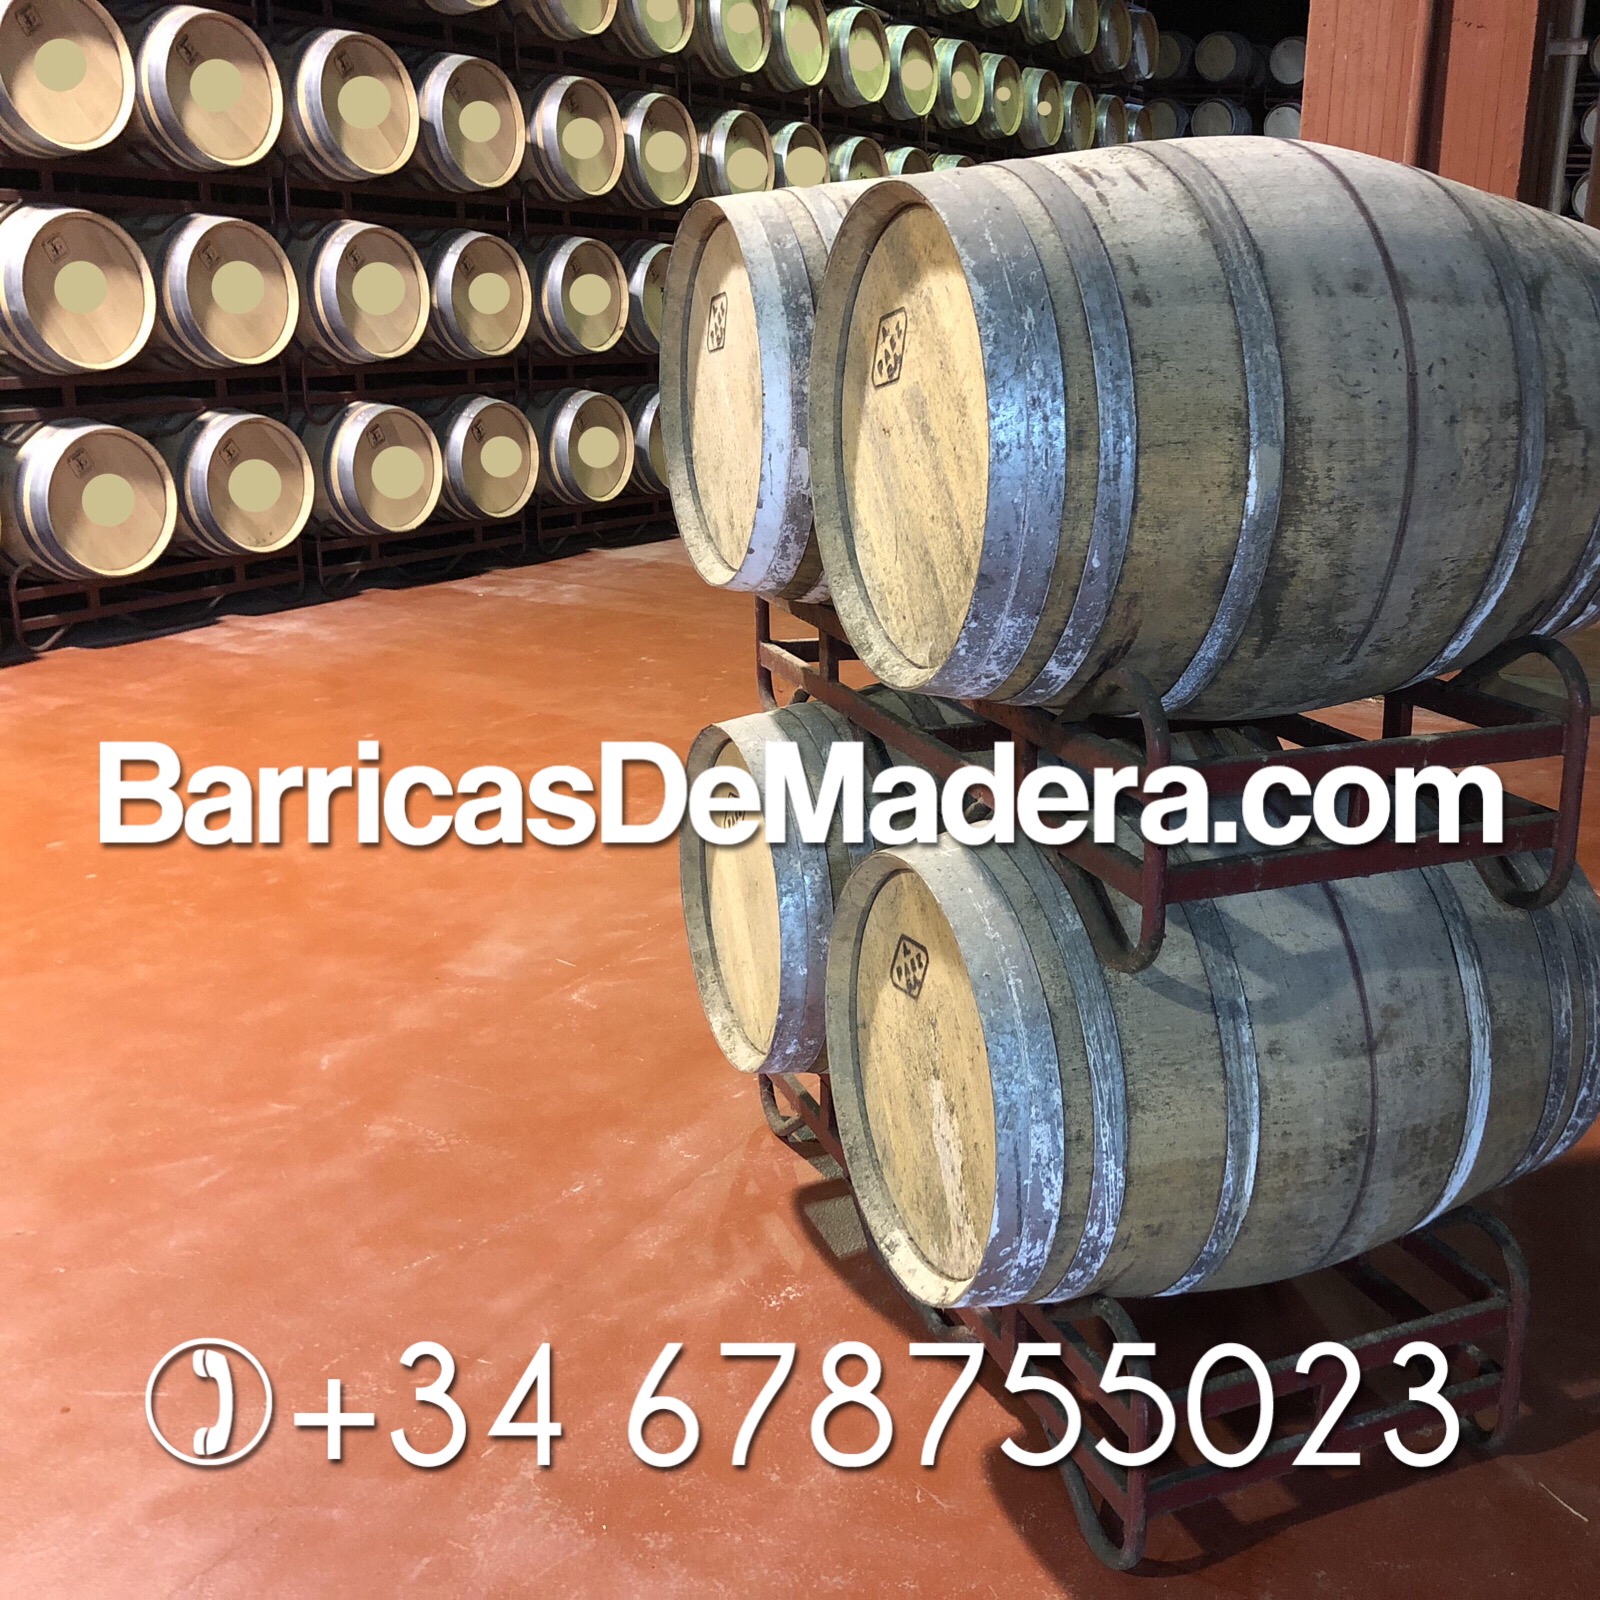 spain-used-wine-barrels-winery-cellar